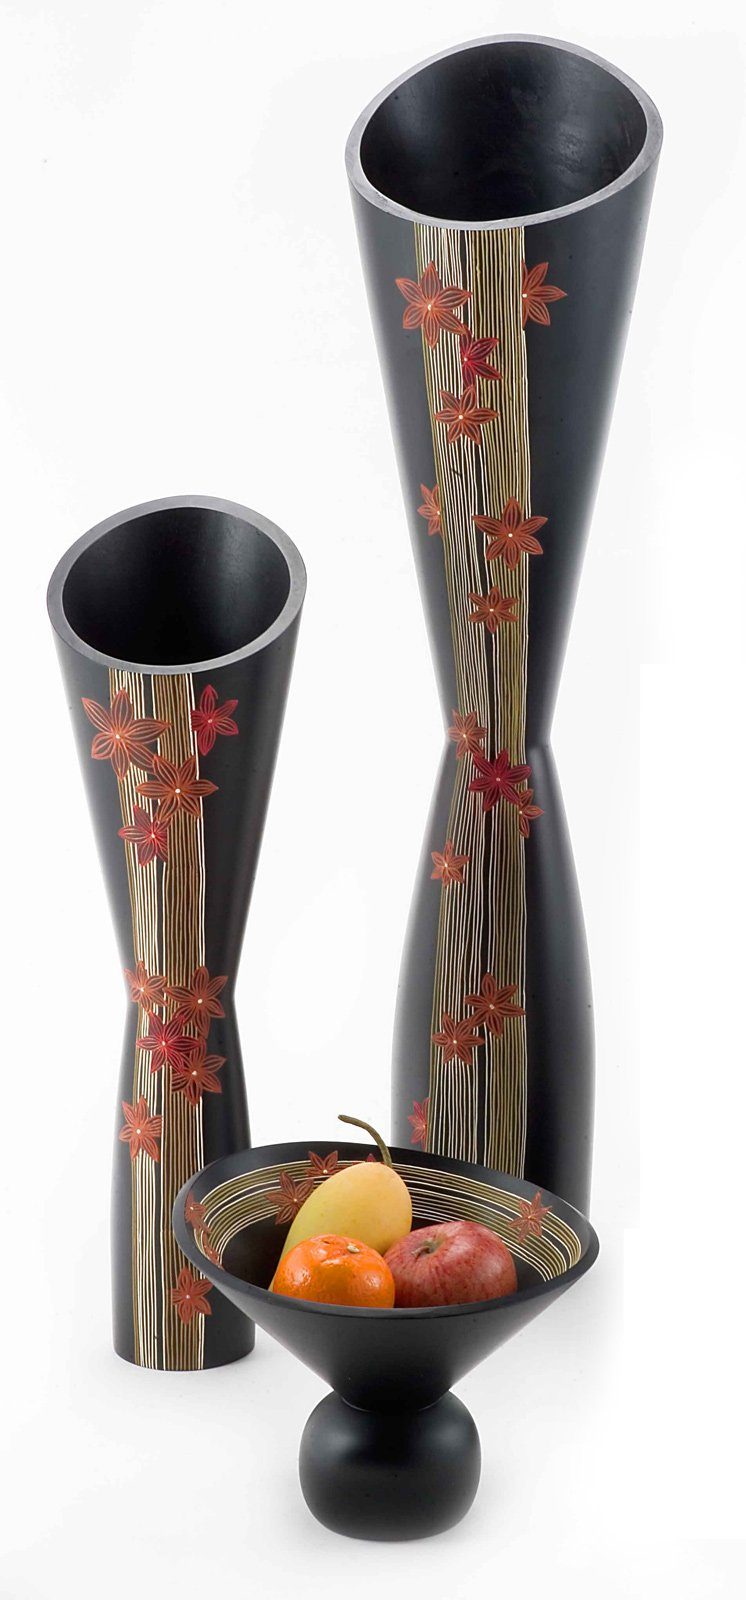 Dekoration, Designvase, St), Holzvase, (0 Deko, ARTRA Bodenvase Tischvase schwarz Mangoholzvase Flower Holz cm Dekovase, H91